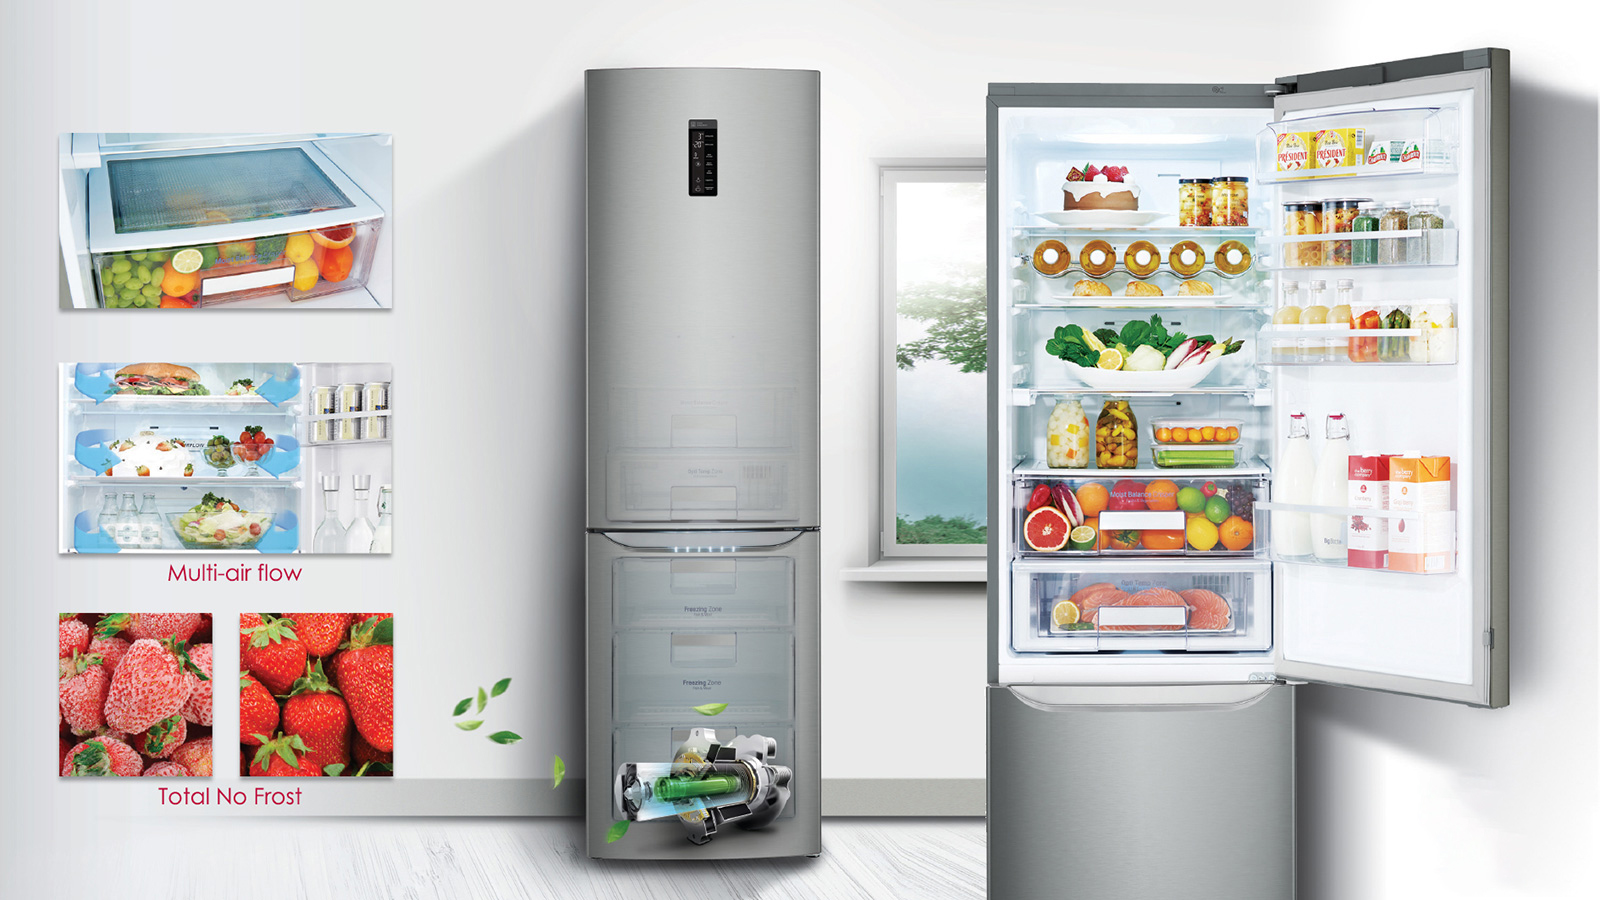 Холодильник с заморозкой. Холодильник Samsung двухкамерный ноу Фрост. Холодильник Samsung no Frost двухкамерный. Холодильник самсунг YJ ahjcn. LG холодильник двухкамерный no Frost.